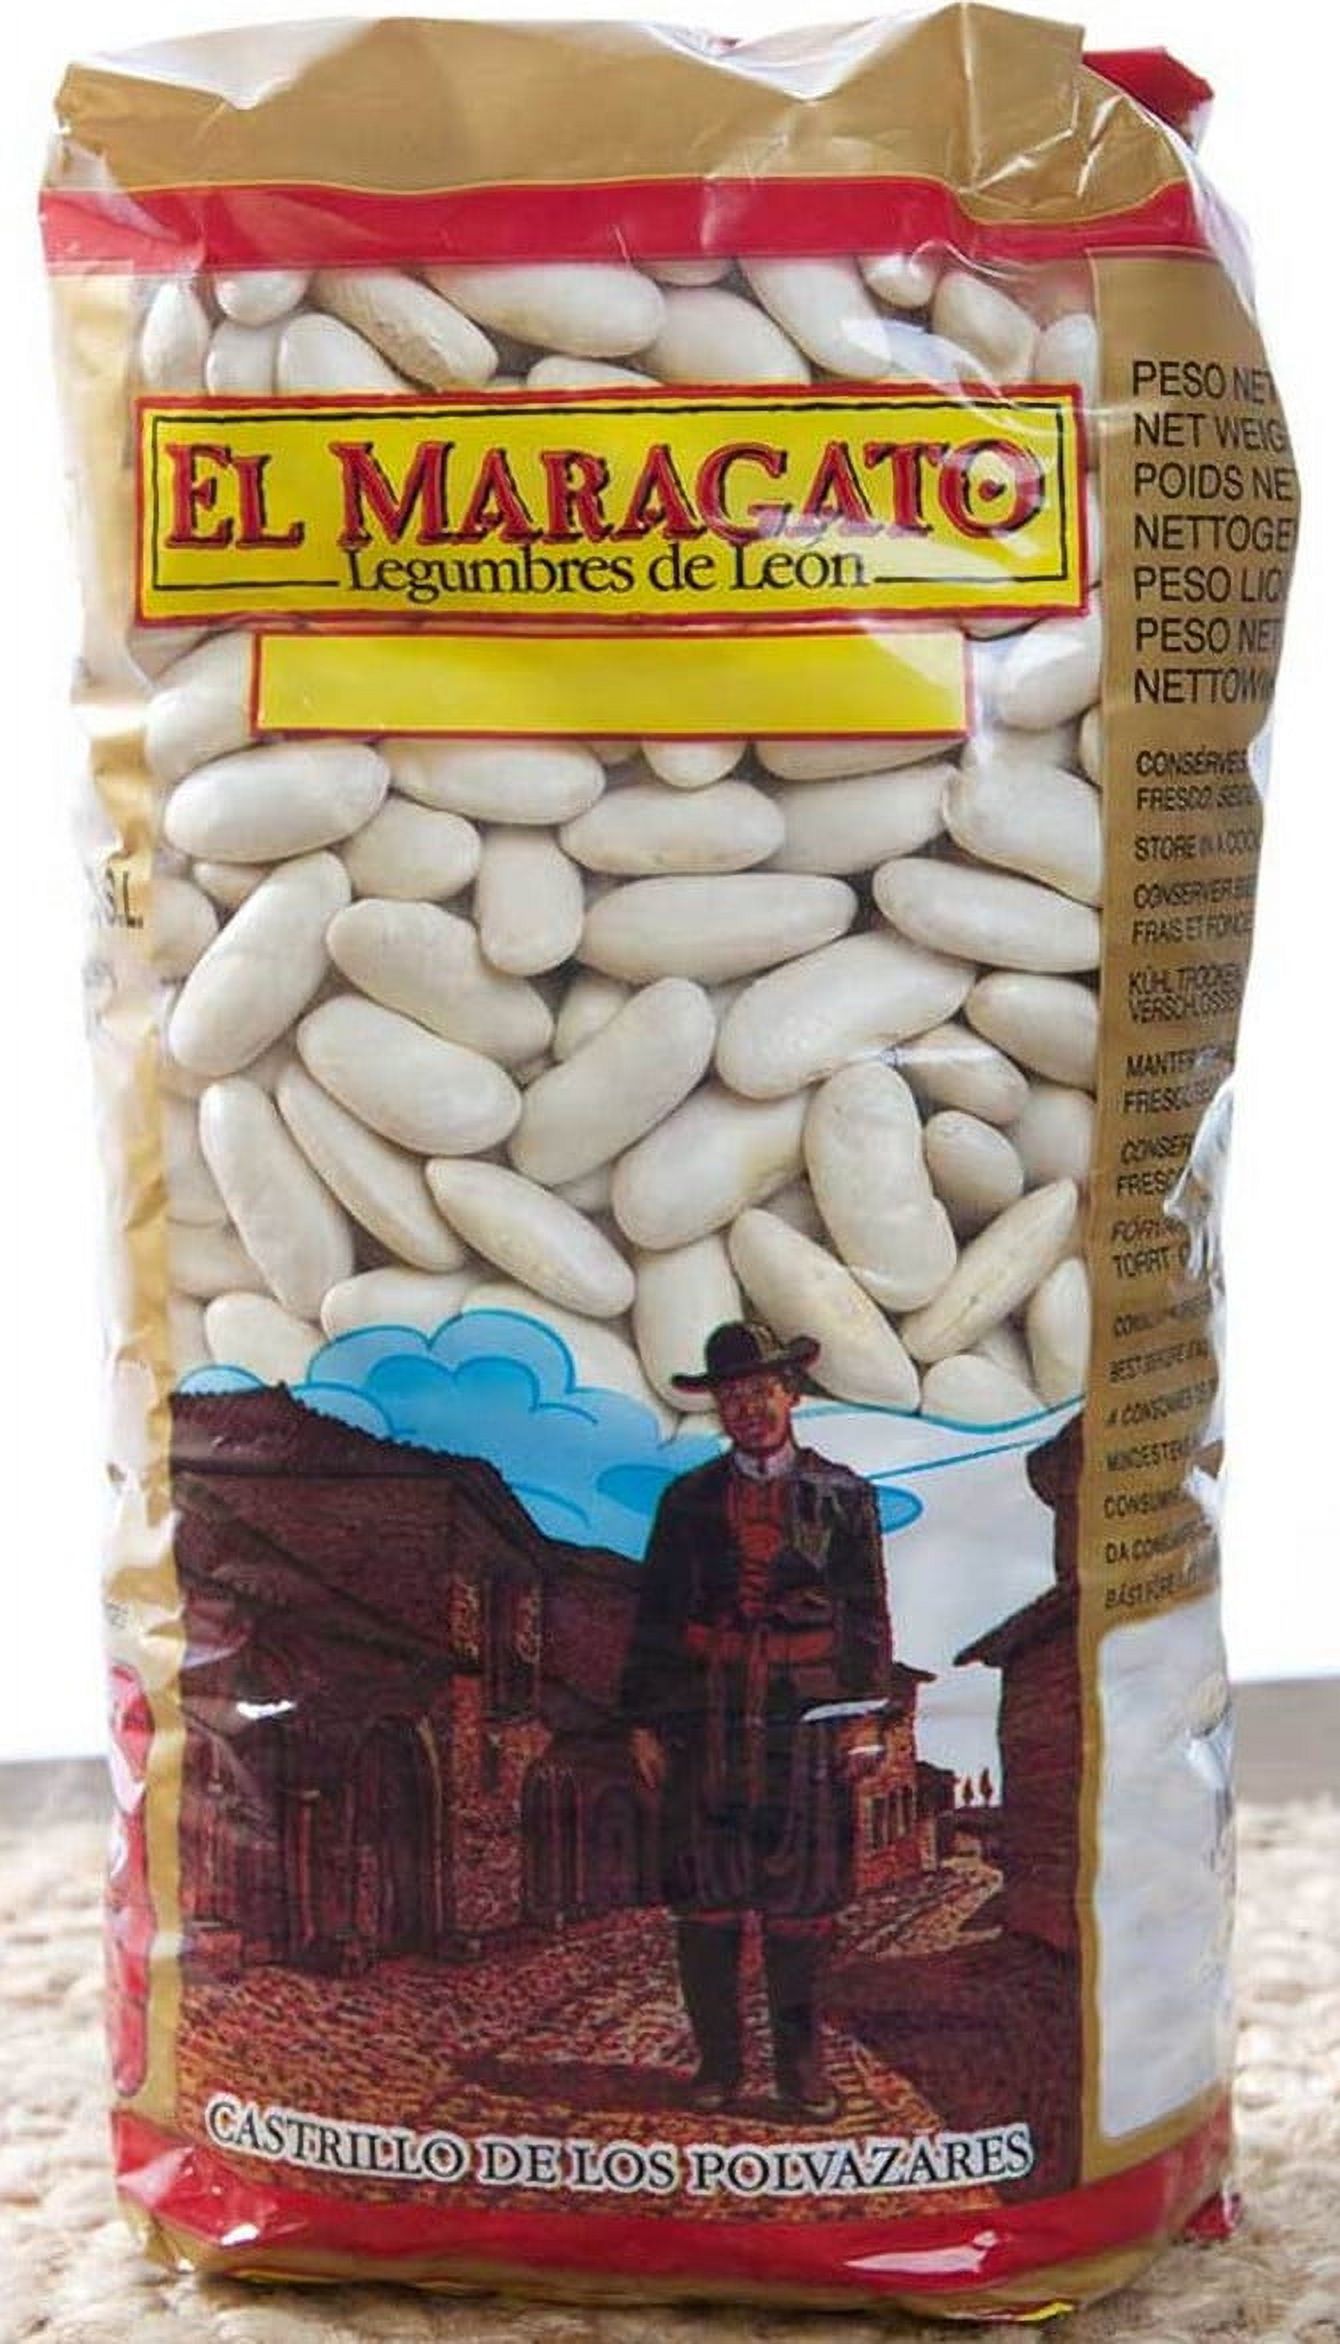 El Maragato Asturian Fabada Dry Beans 2.2 lb (1 kilo) - image 1 of 4